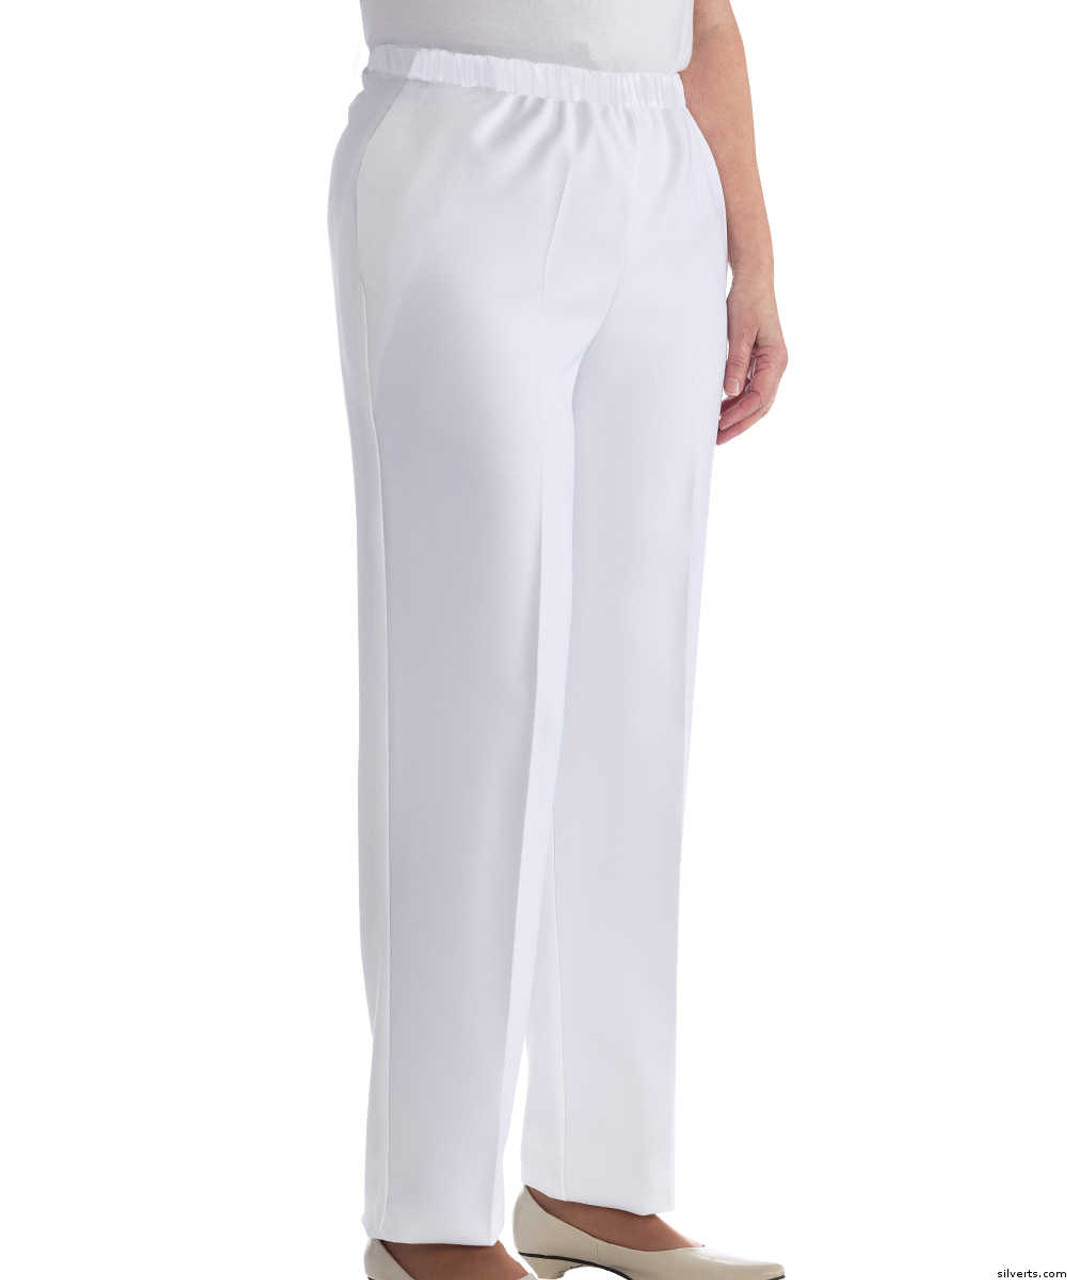 Silvert's 130911706 Women's Elastic Waist Polyester Pants 2 Pockets , Size 42, WHITE (Silvert's 130911706)